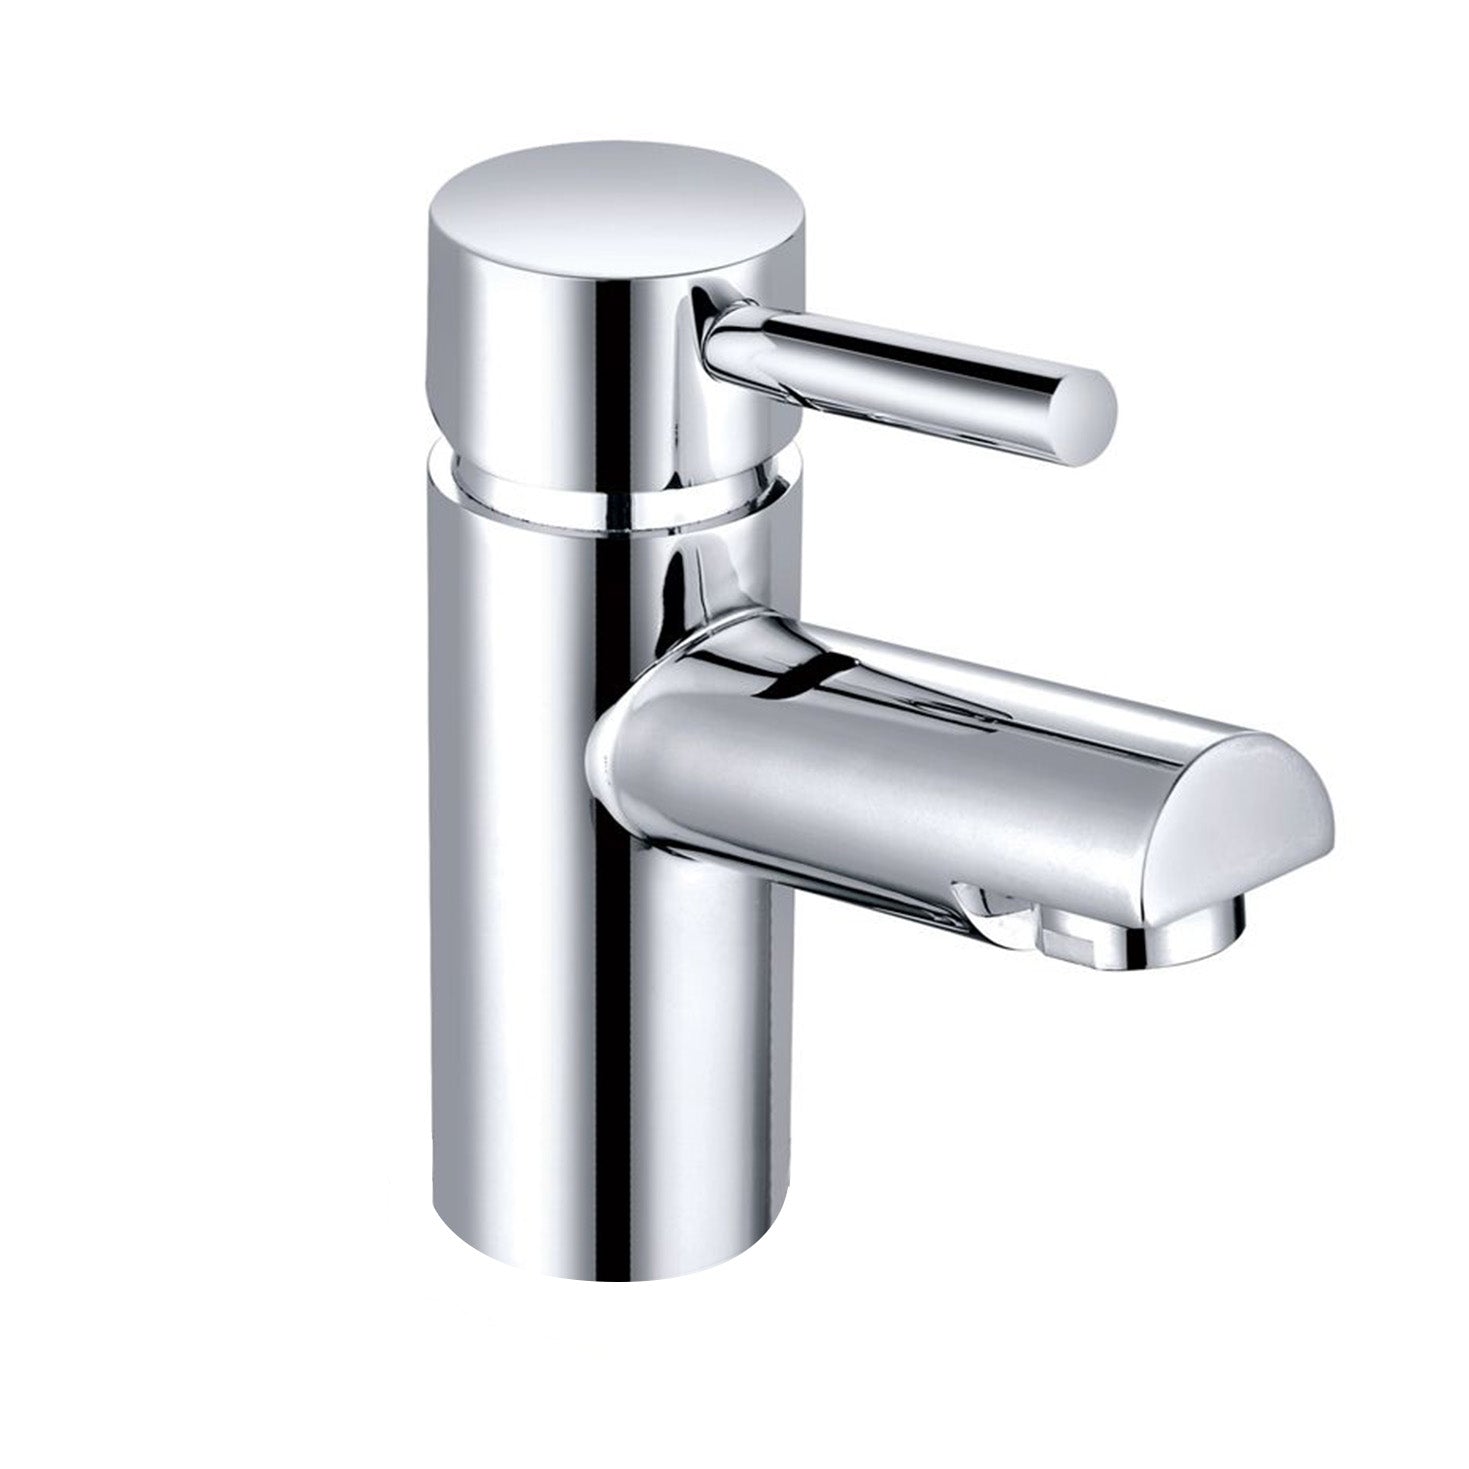 Kyic Bathroom Chrome Basin Sink Single Lever Mixer Tap